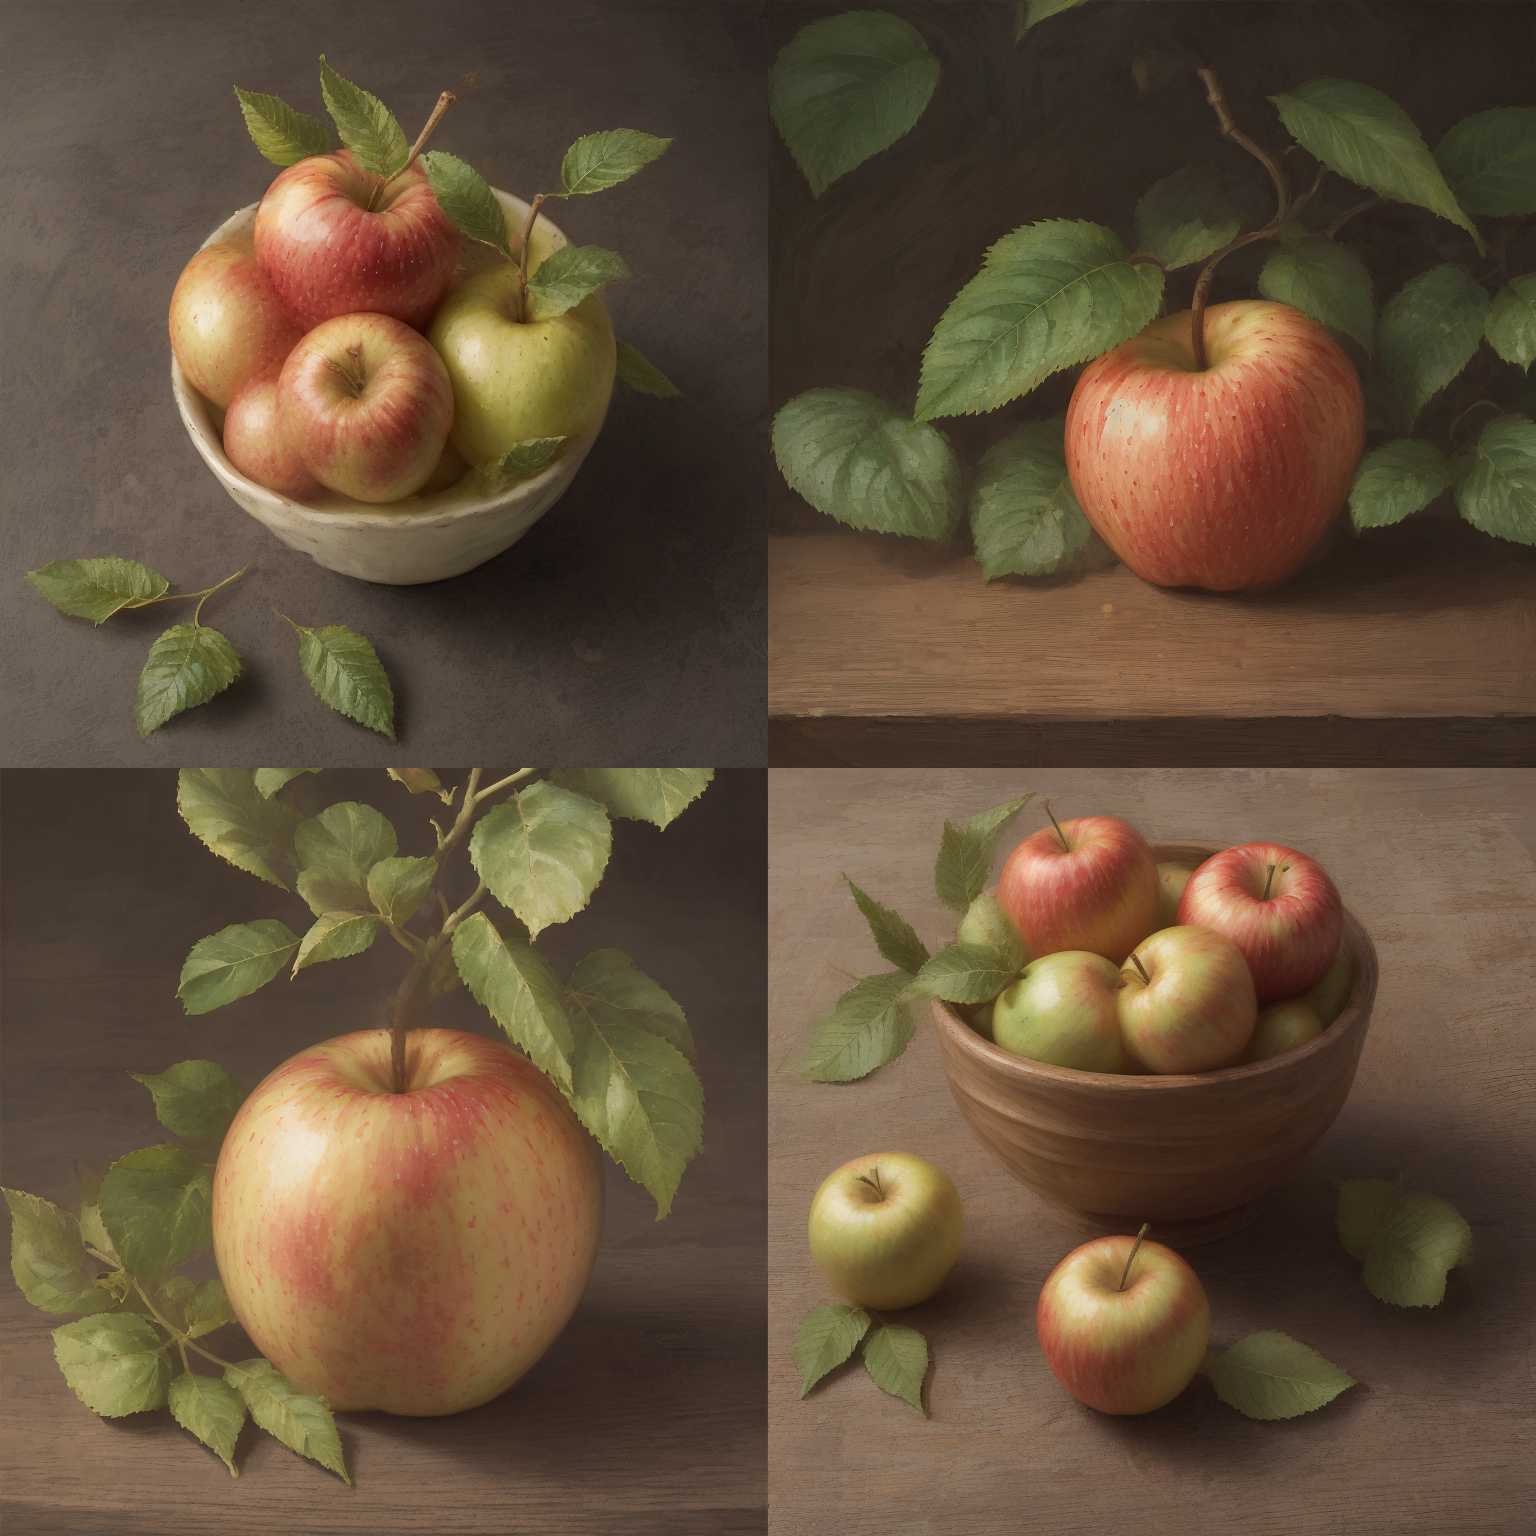 A ripe apple